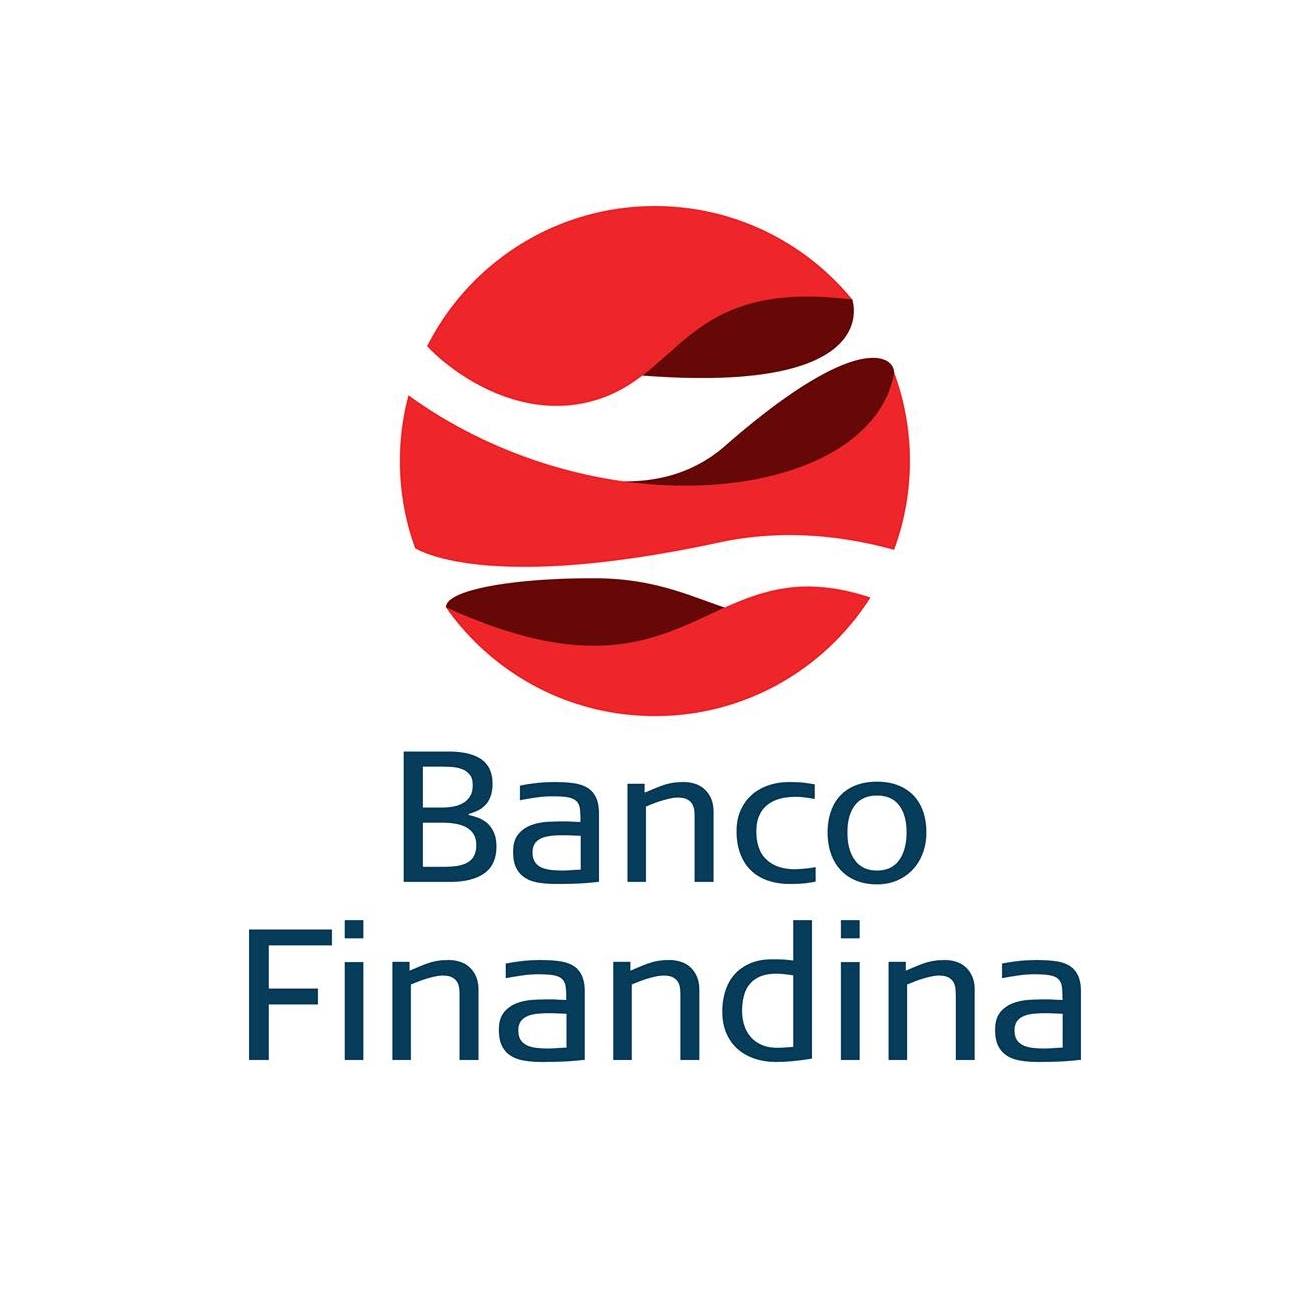 Banco Finandina - Crunchbase Company Profile & Funding